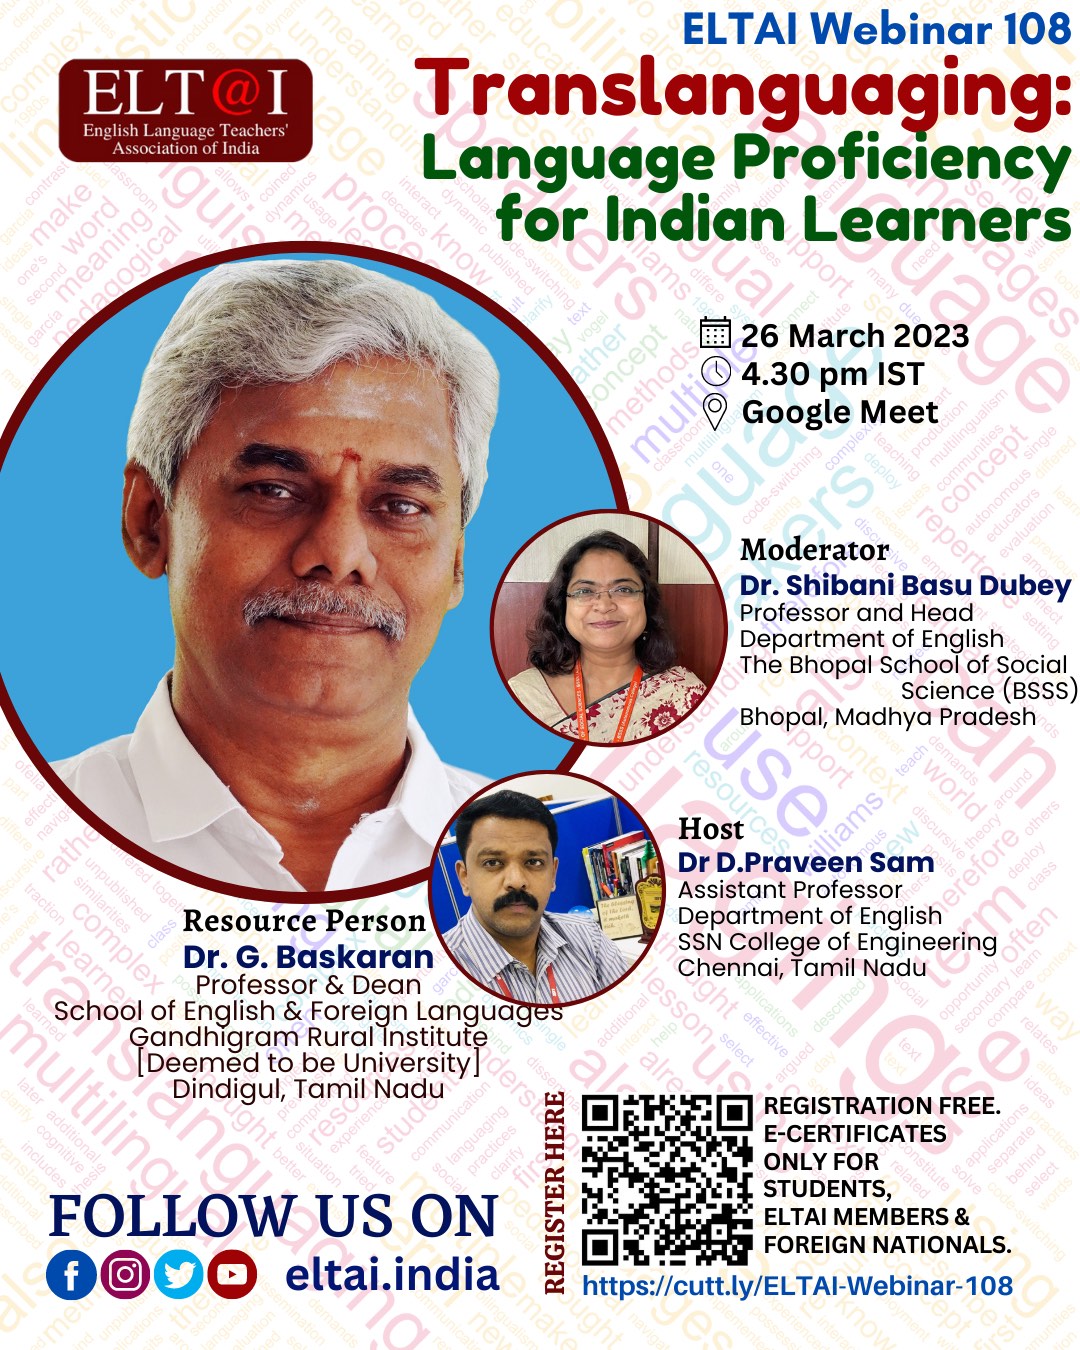 ELTAI Webinar: Translanguaging: Language Proficiency for Indian Learners